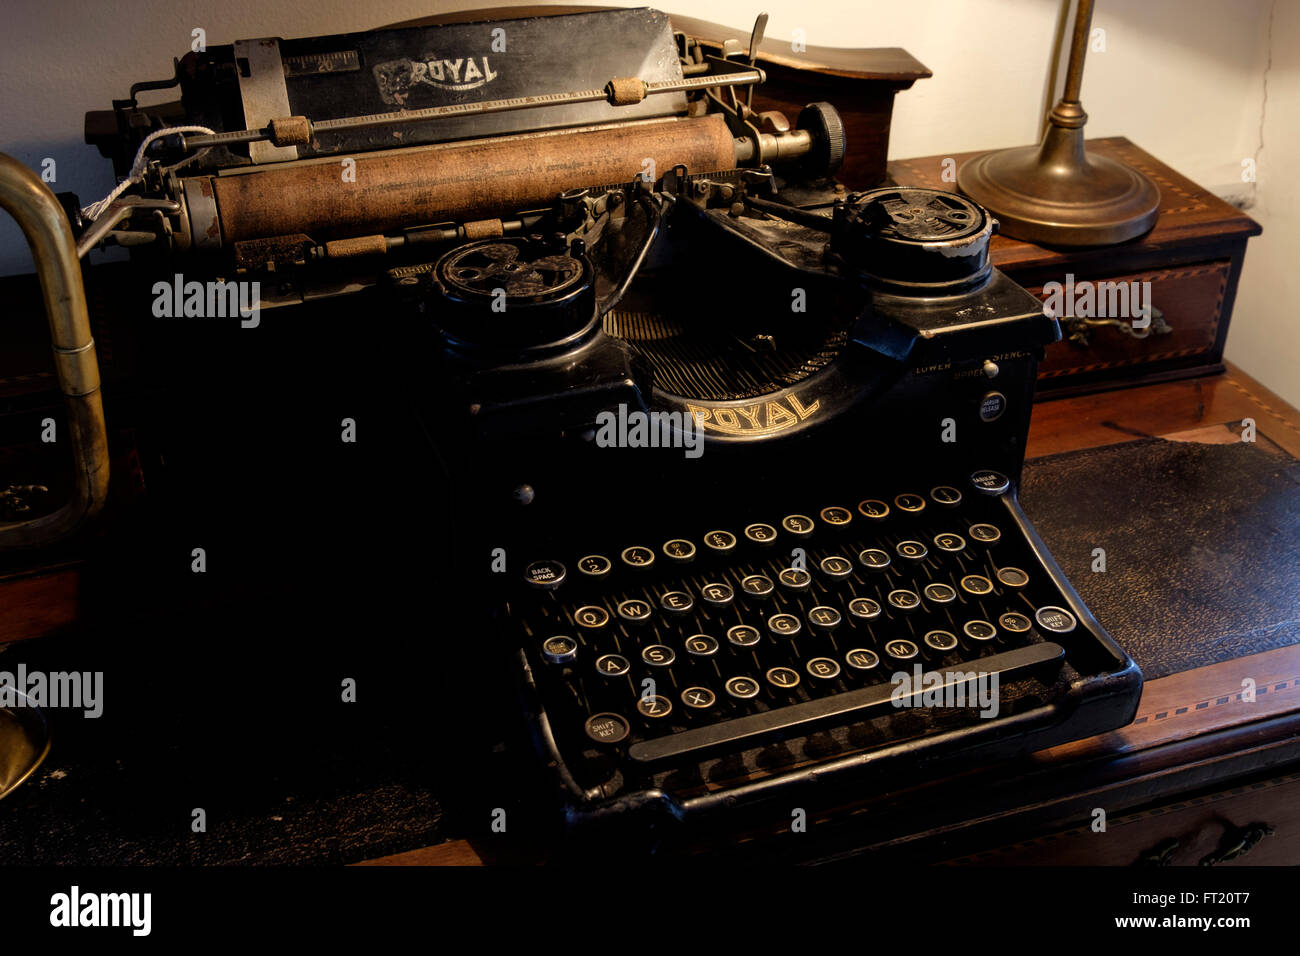 Antique Royal typewriter on a desk Stock Photo